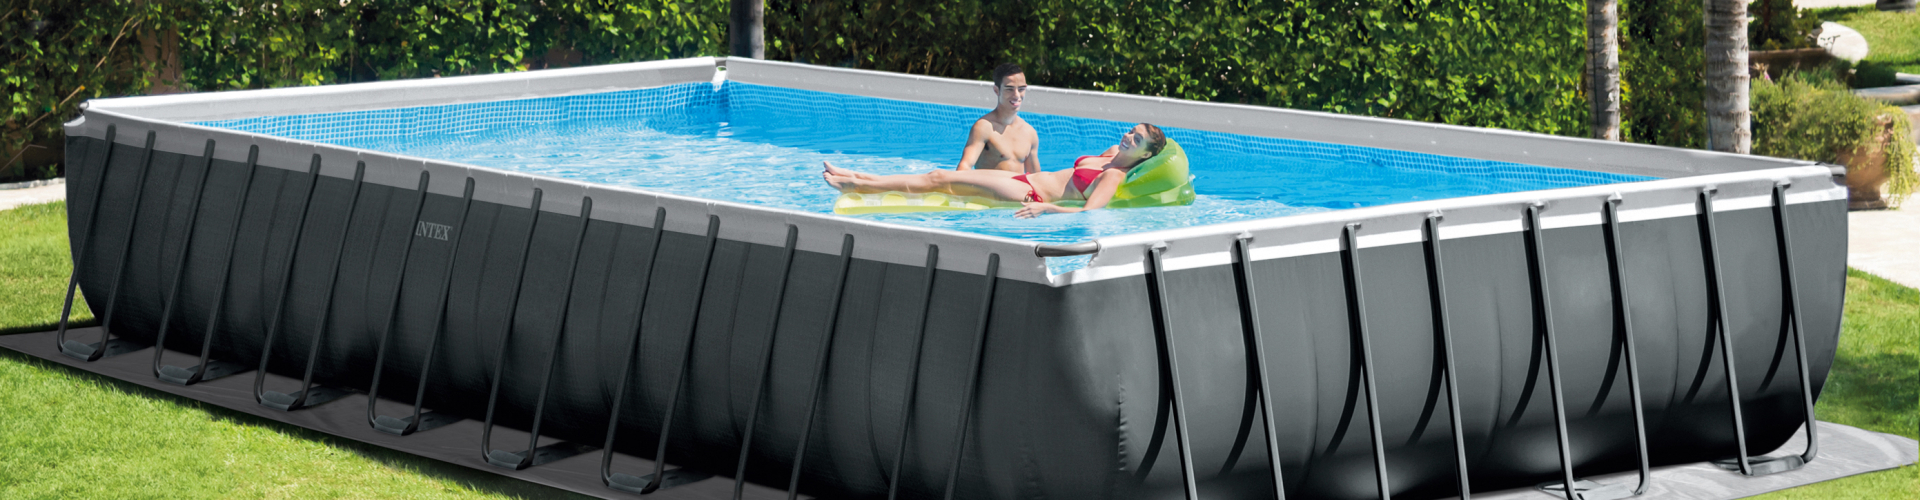 Intex accessoires - Intex rechthoekig zwembad | AQualu